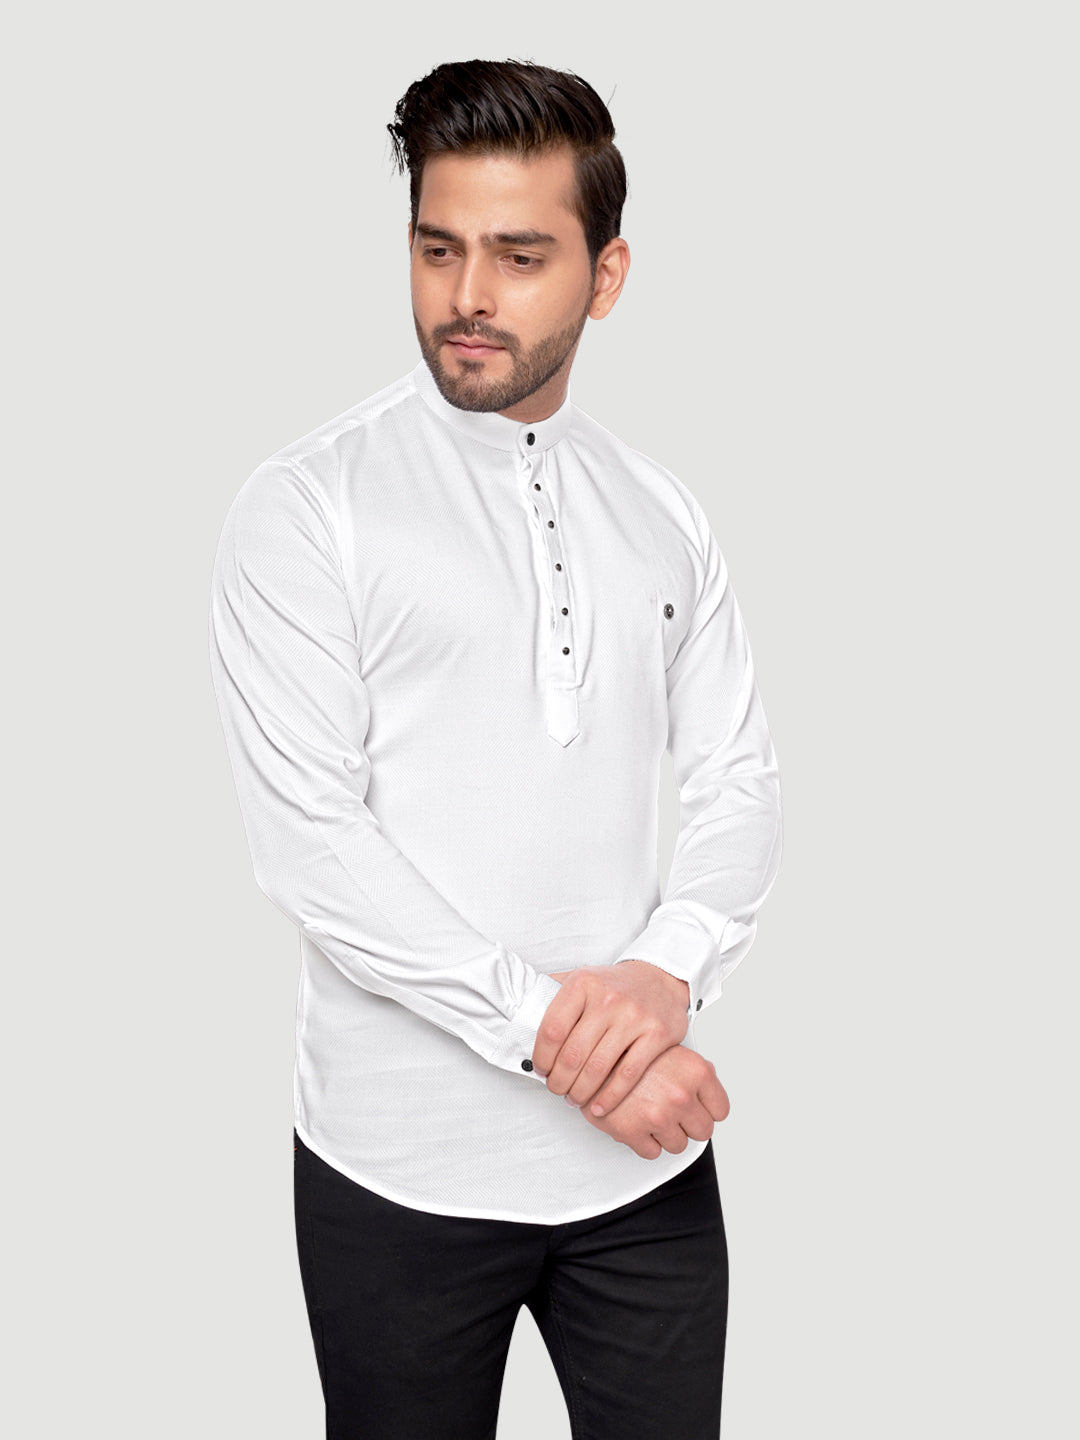 Black and White Shirts Men's Designer Short Kurta with Metal Buttons White